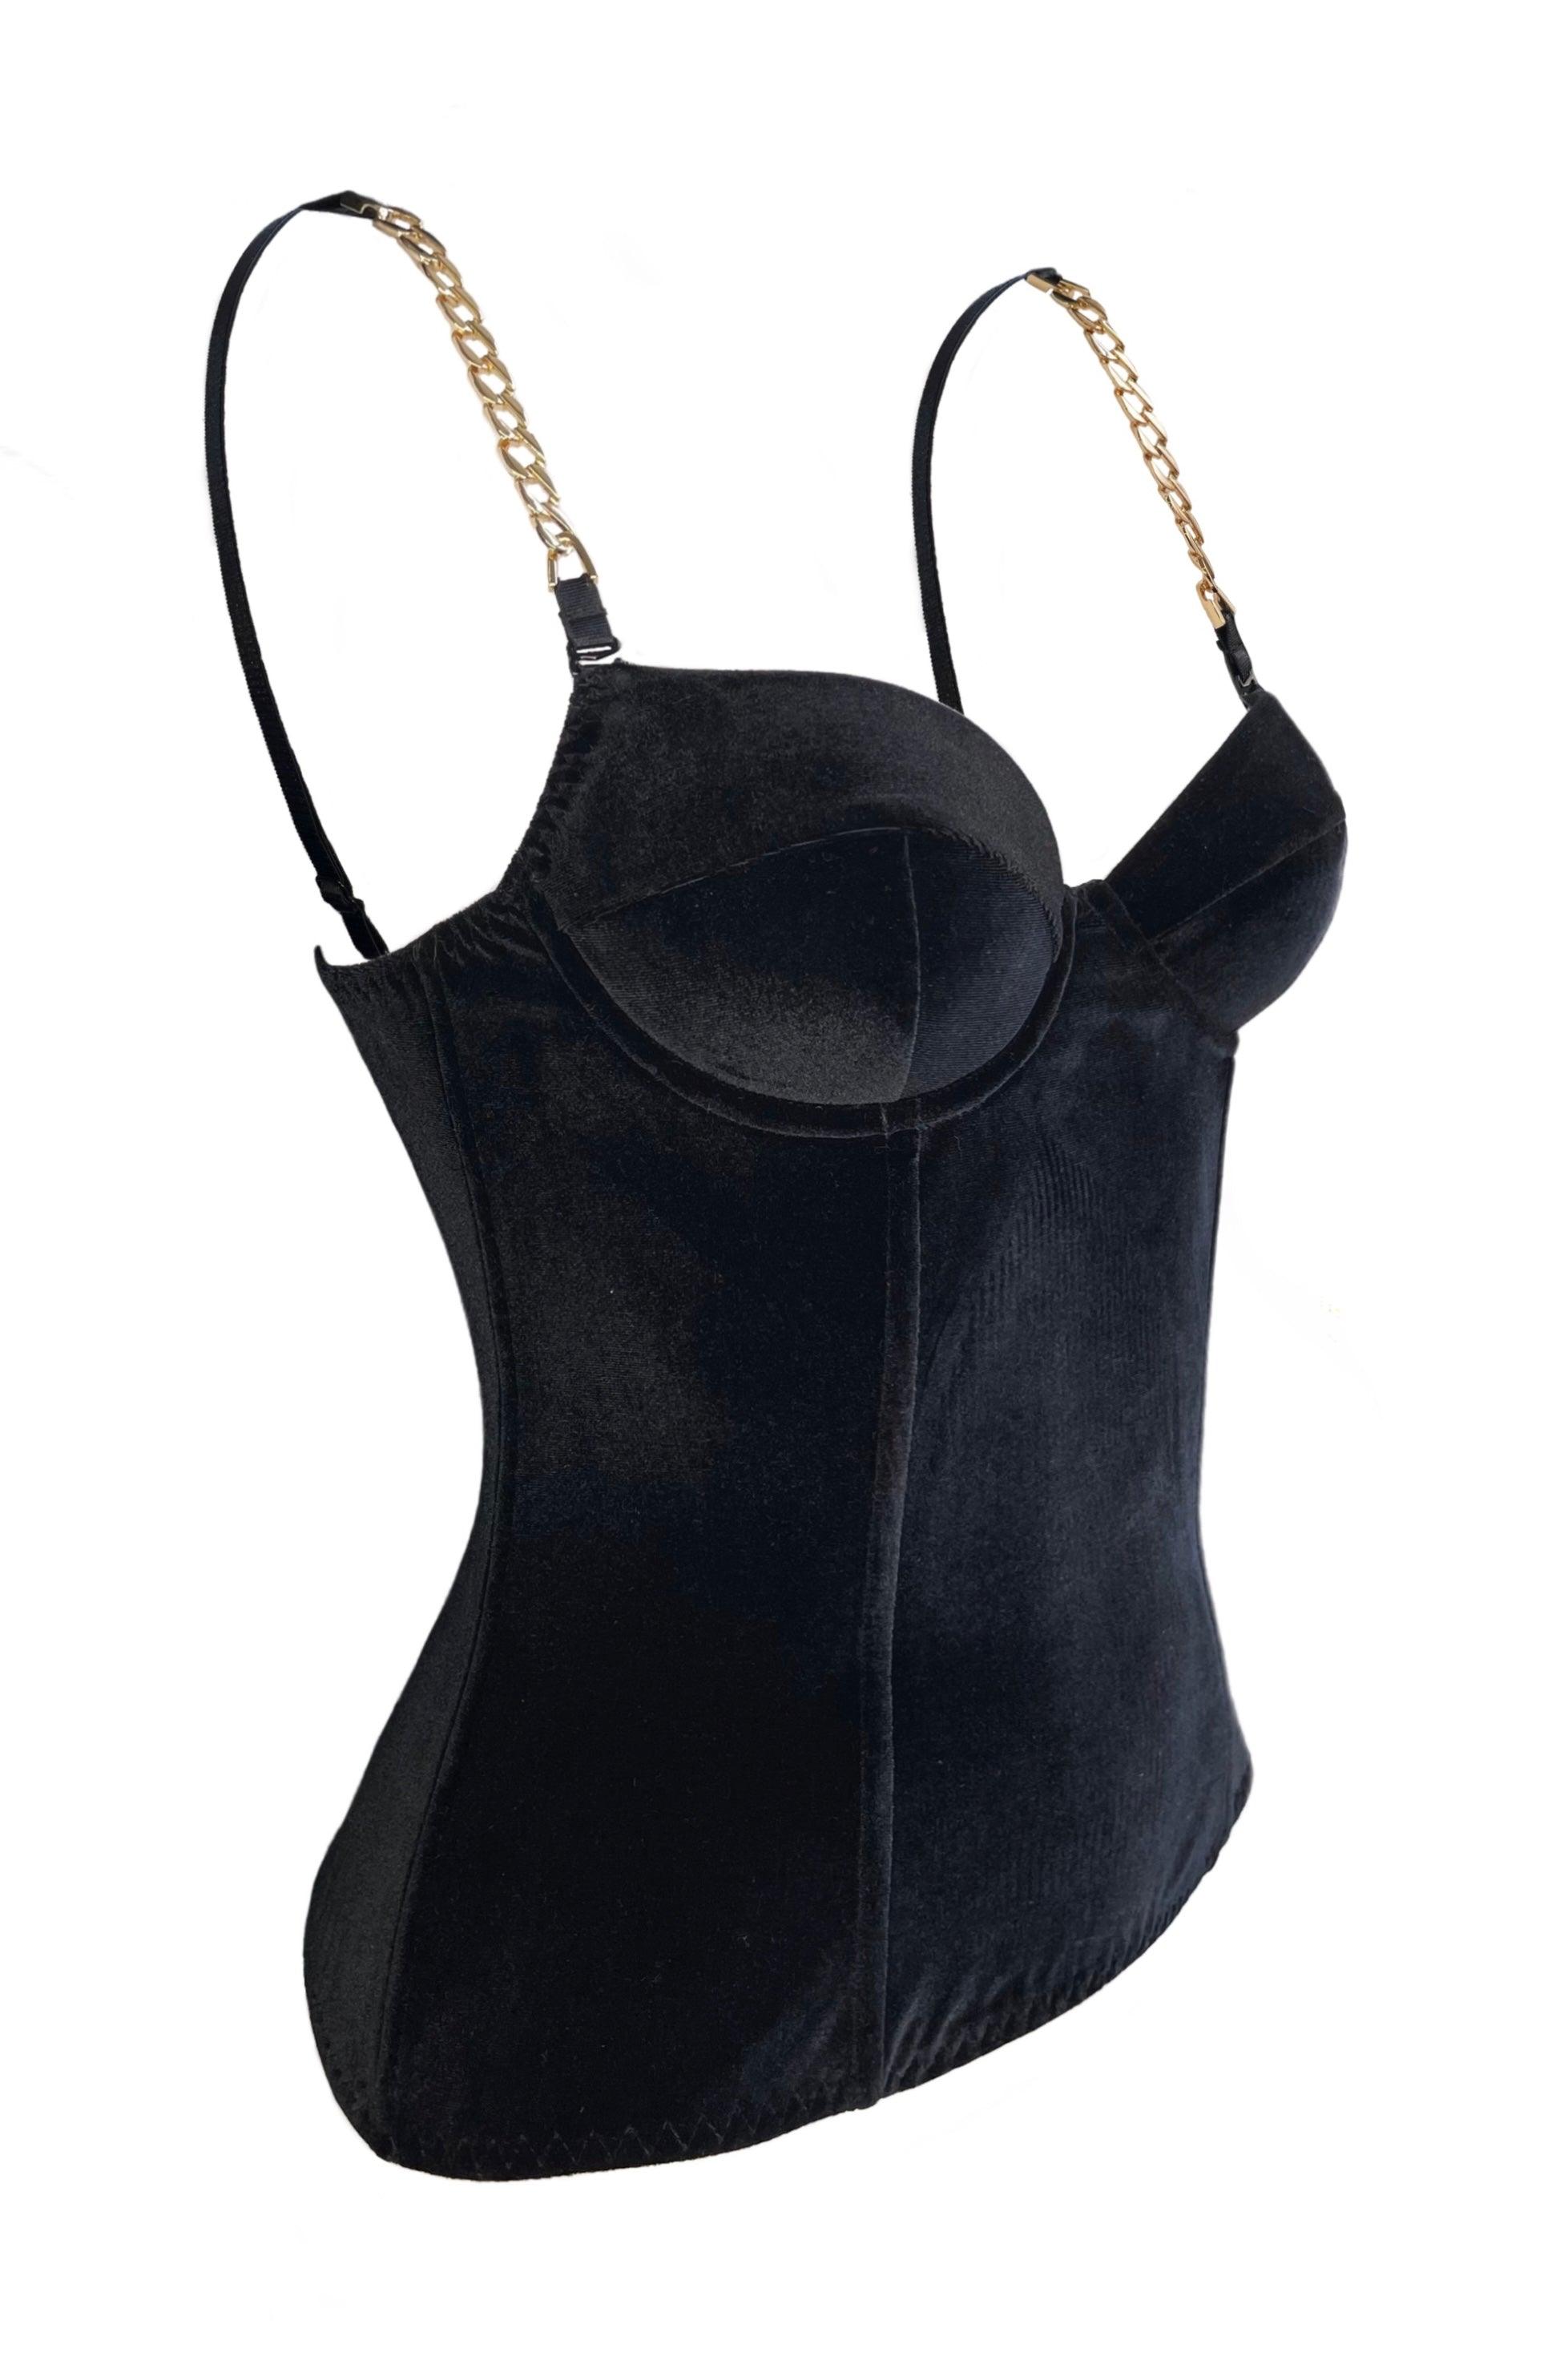 Velvetta black corset with chains - yesUndress